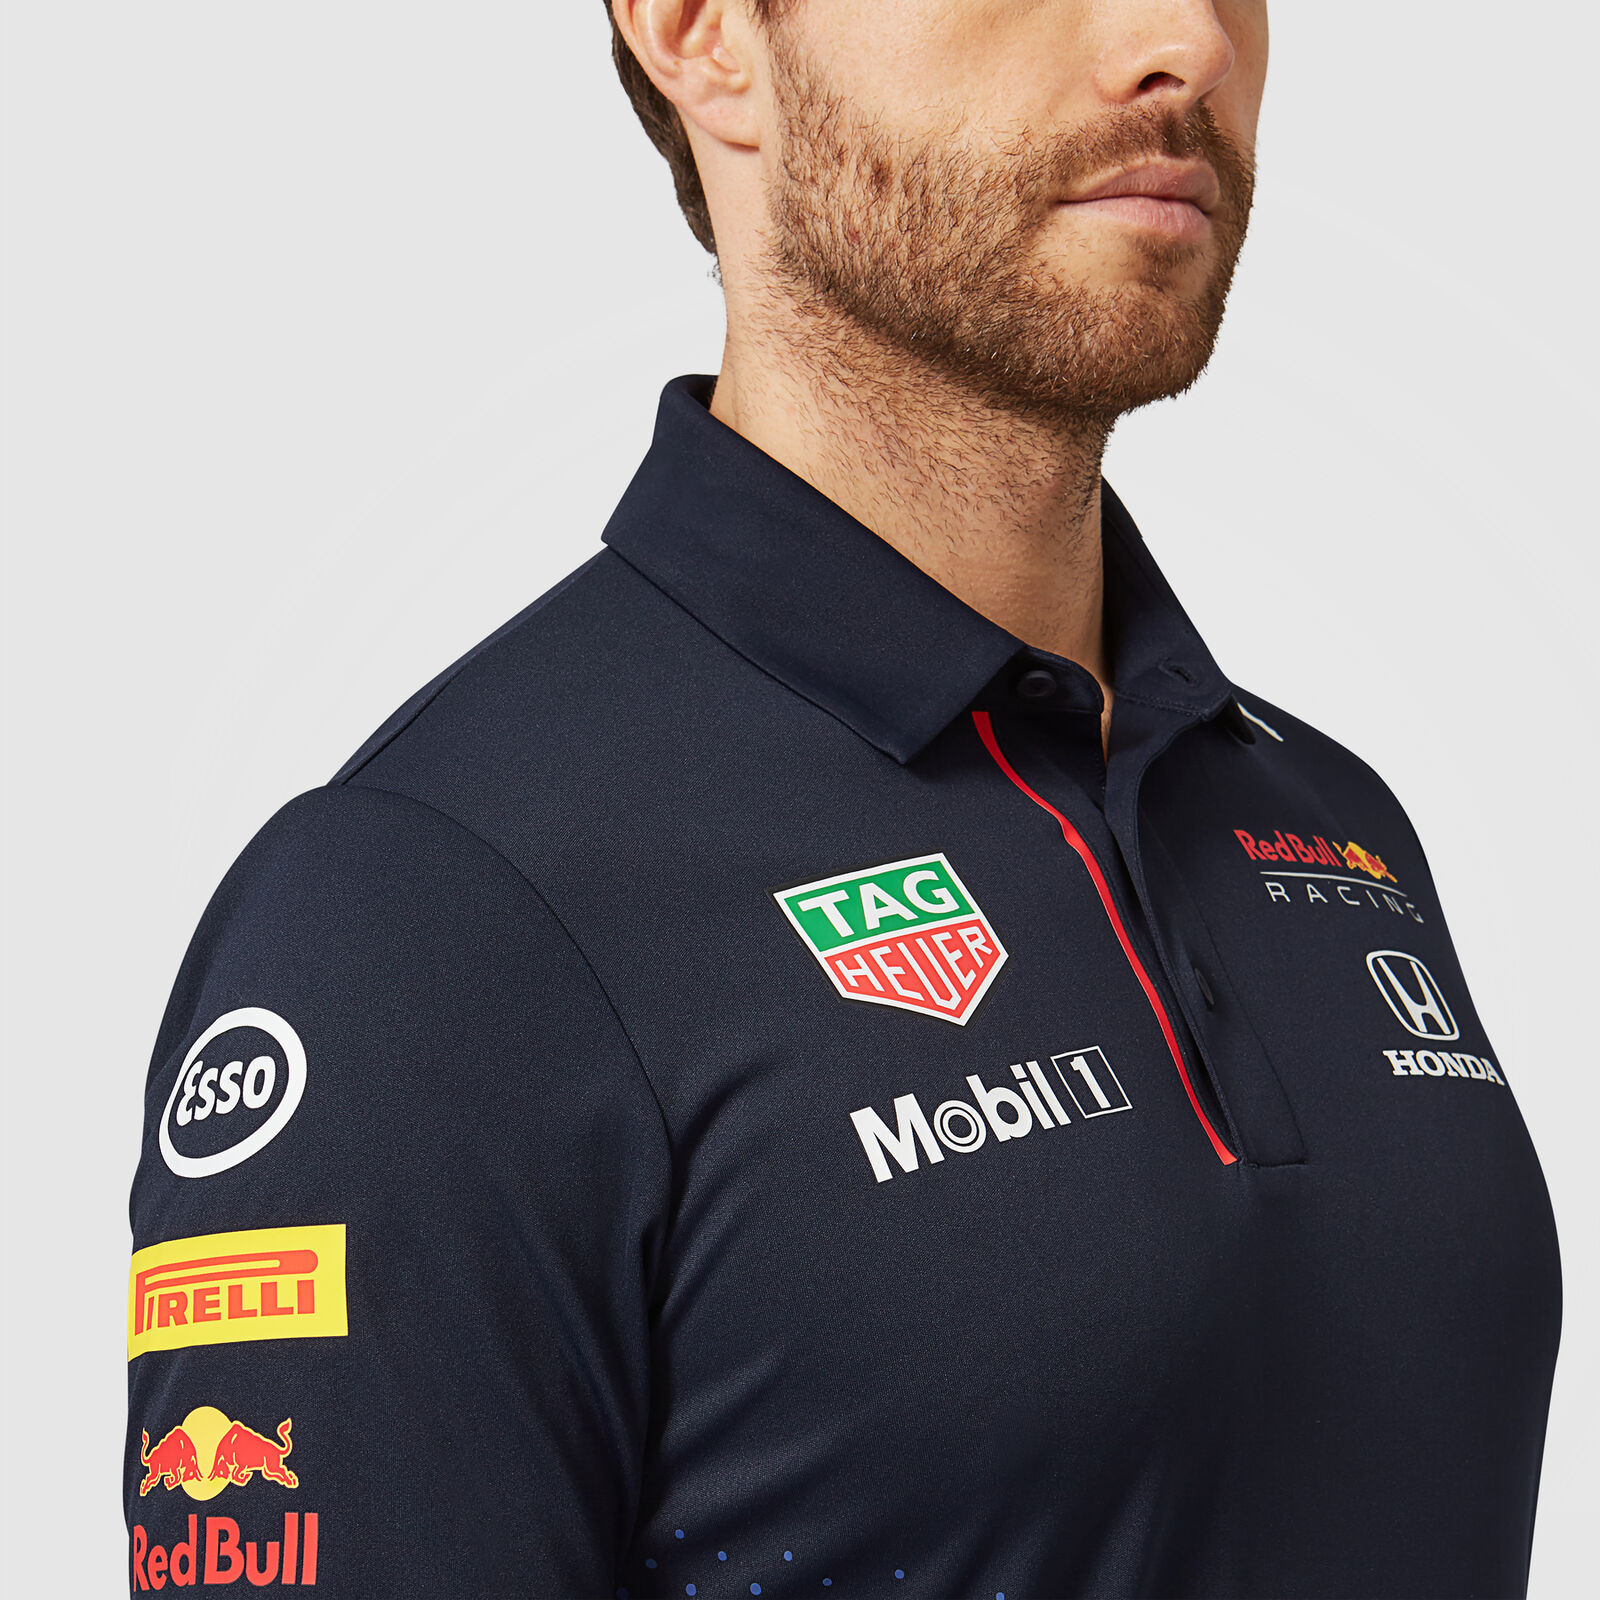 2021 Team Polo - Red Bull Racing